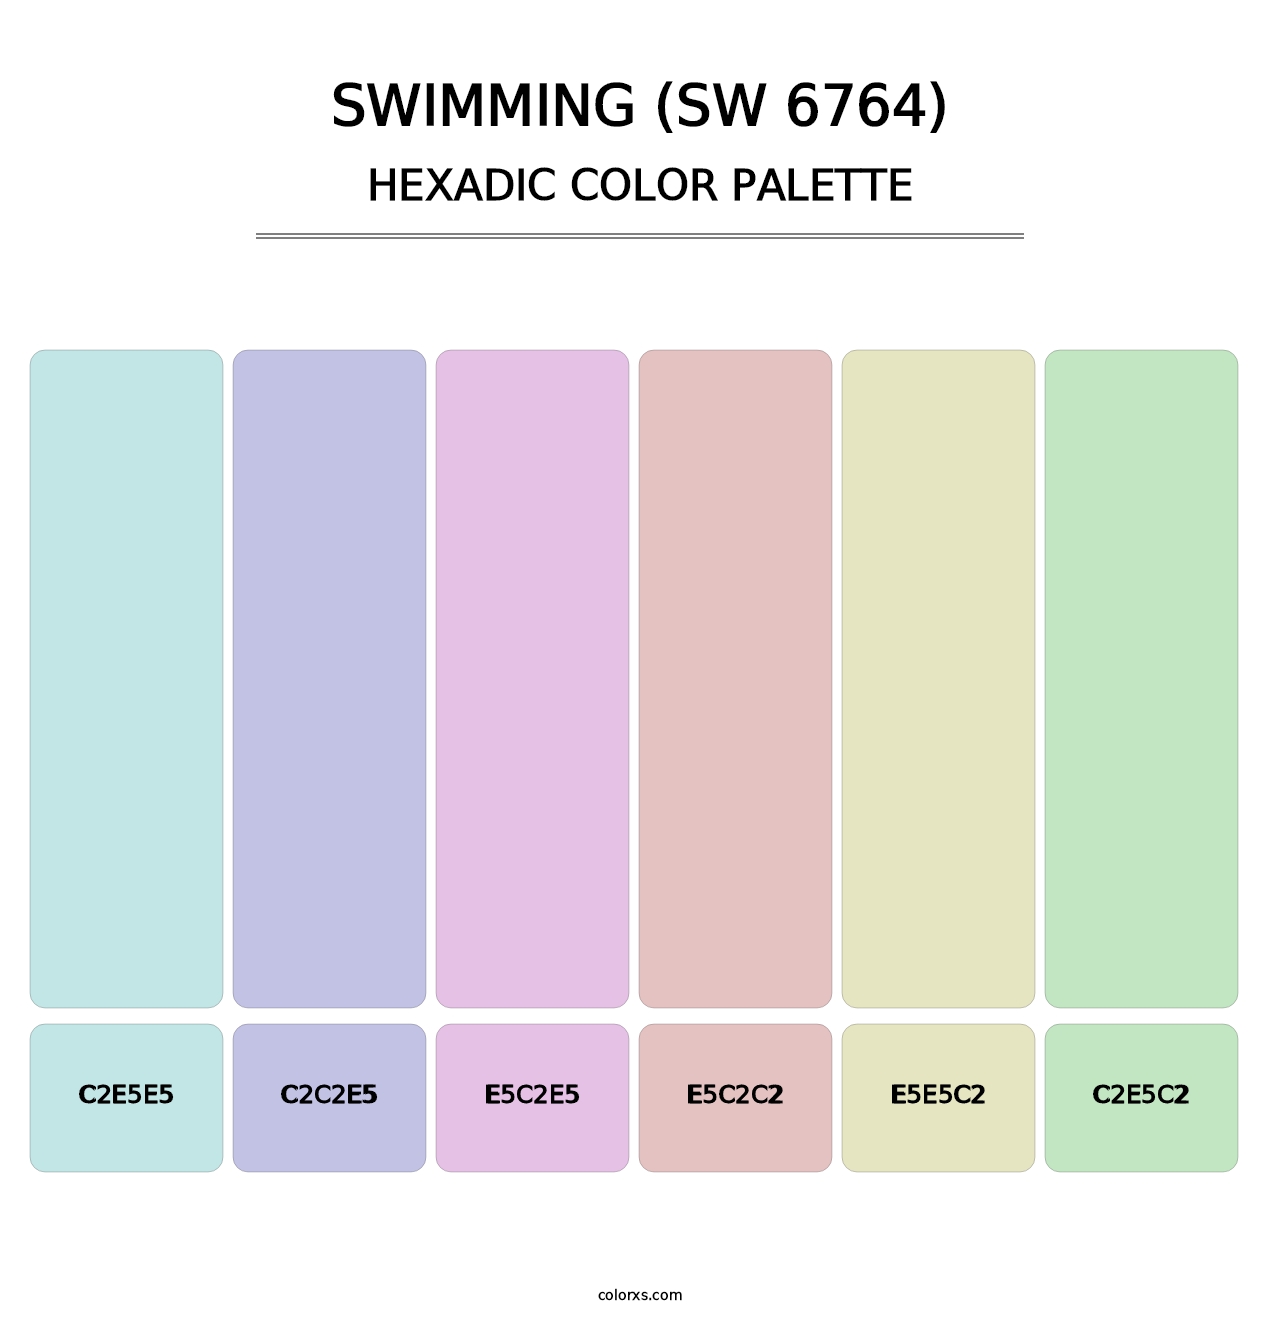 Swimming (SW 6764) - Hexadic Color Palette